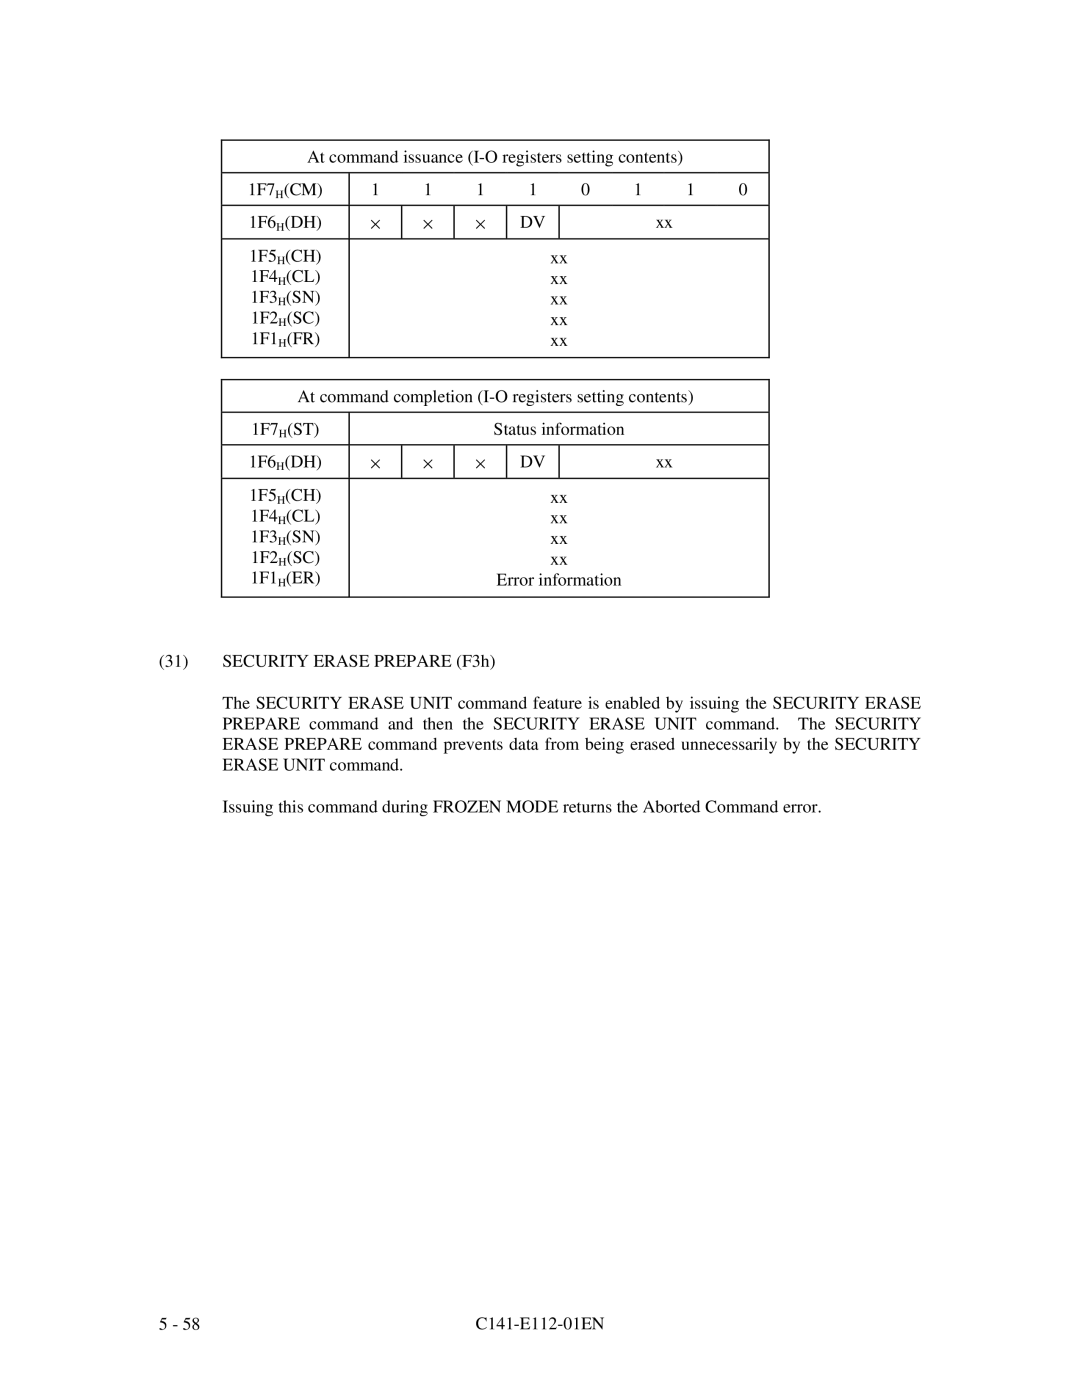 Fujitsu MPG3XXXAH At command issuance I-O registers setting contents, 1F7 HCM, 1F6 HDH, 1F5 HCH, 1F4 HCL, 1F3 HSN, 1F2 HSC 